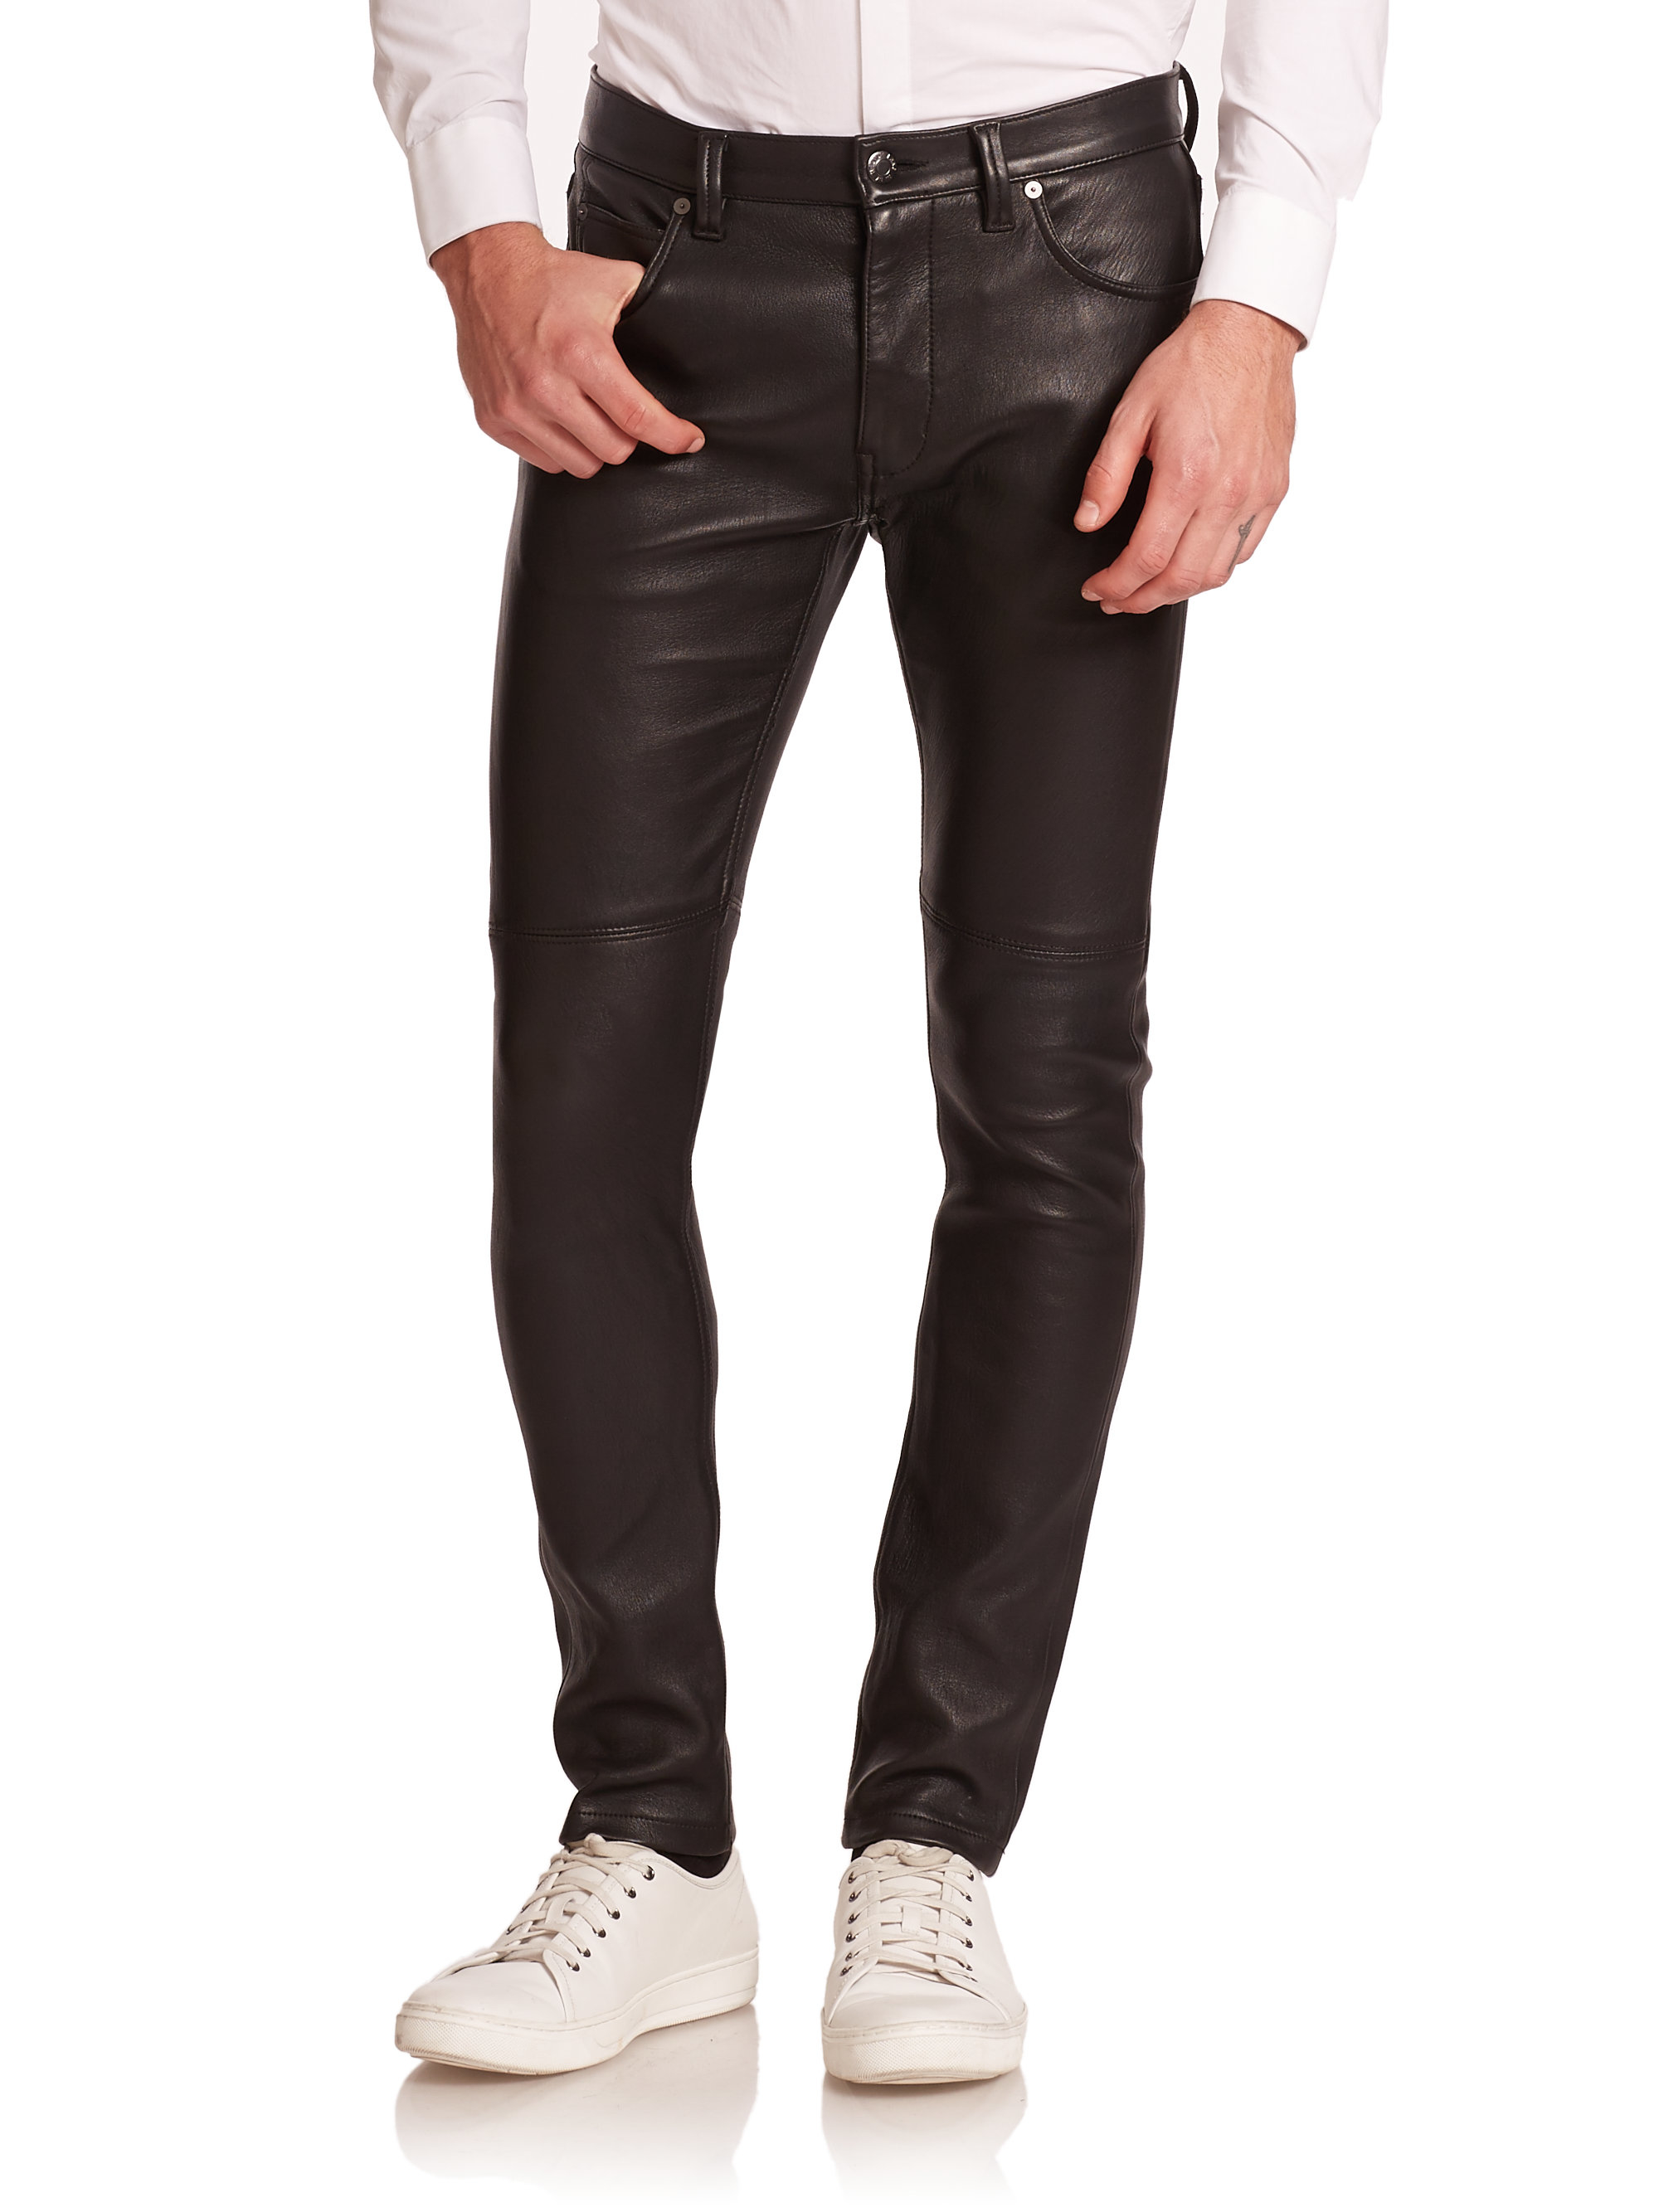 Lyst - Helmut Lang Skinny-fit Leather Pants in Black for Men